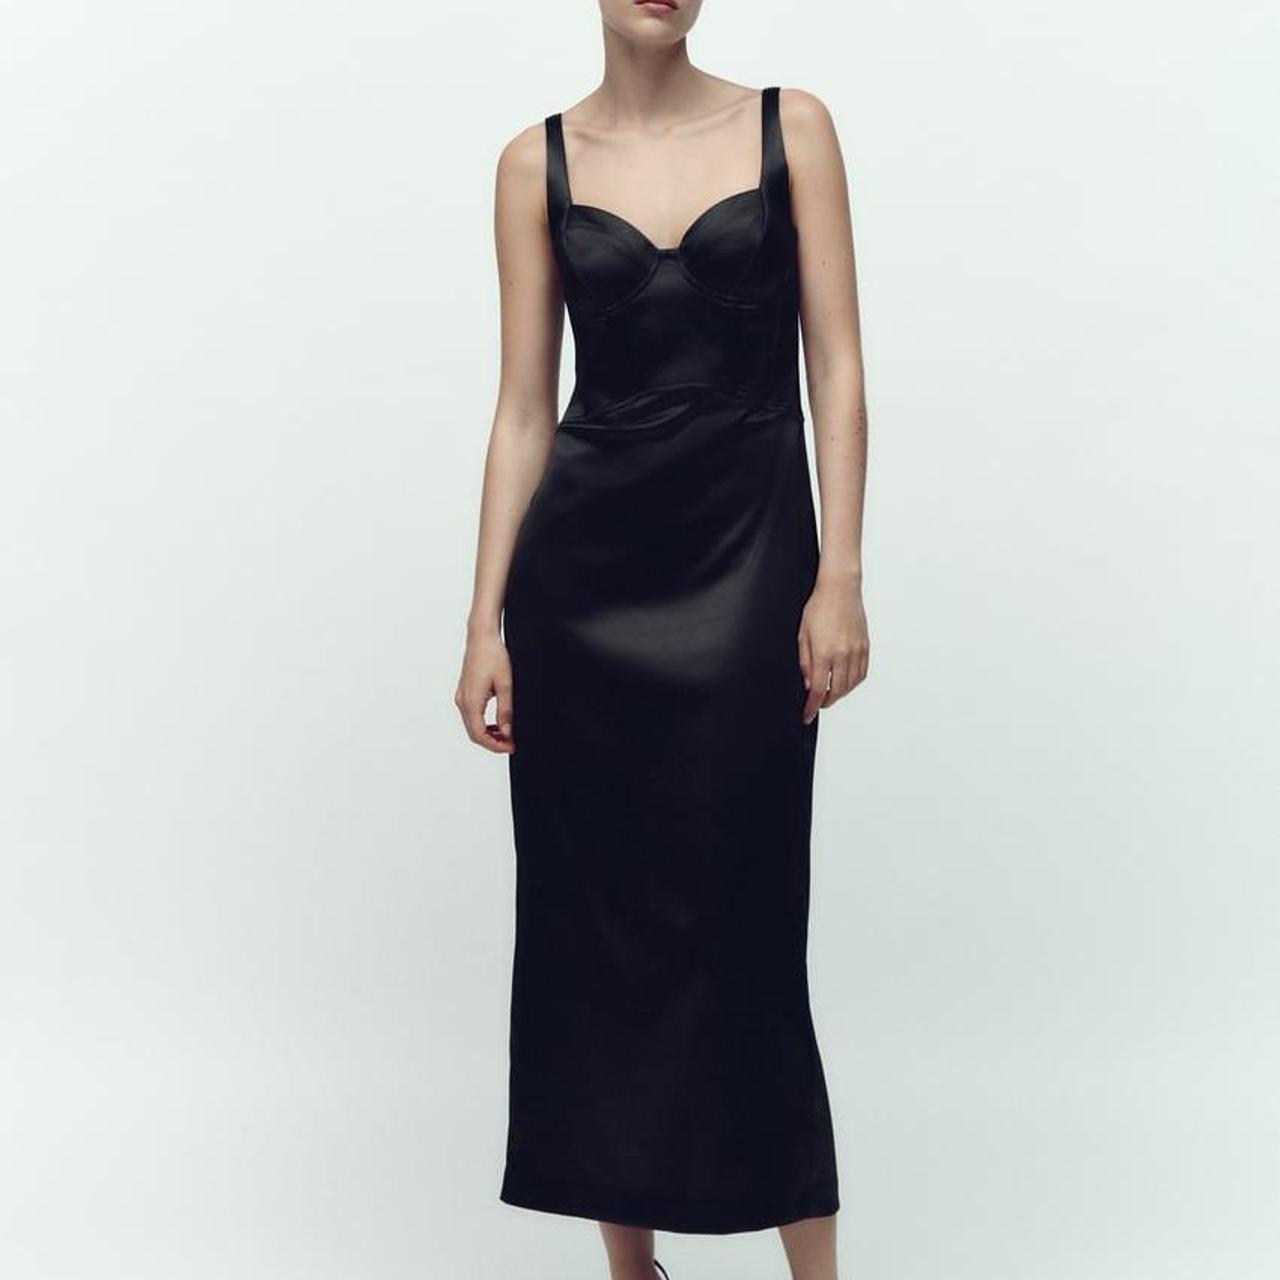 Zara, Dresses, Nwt Zara Satin Corset Style Midi Dress